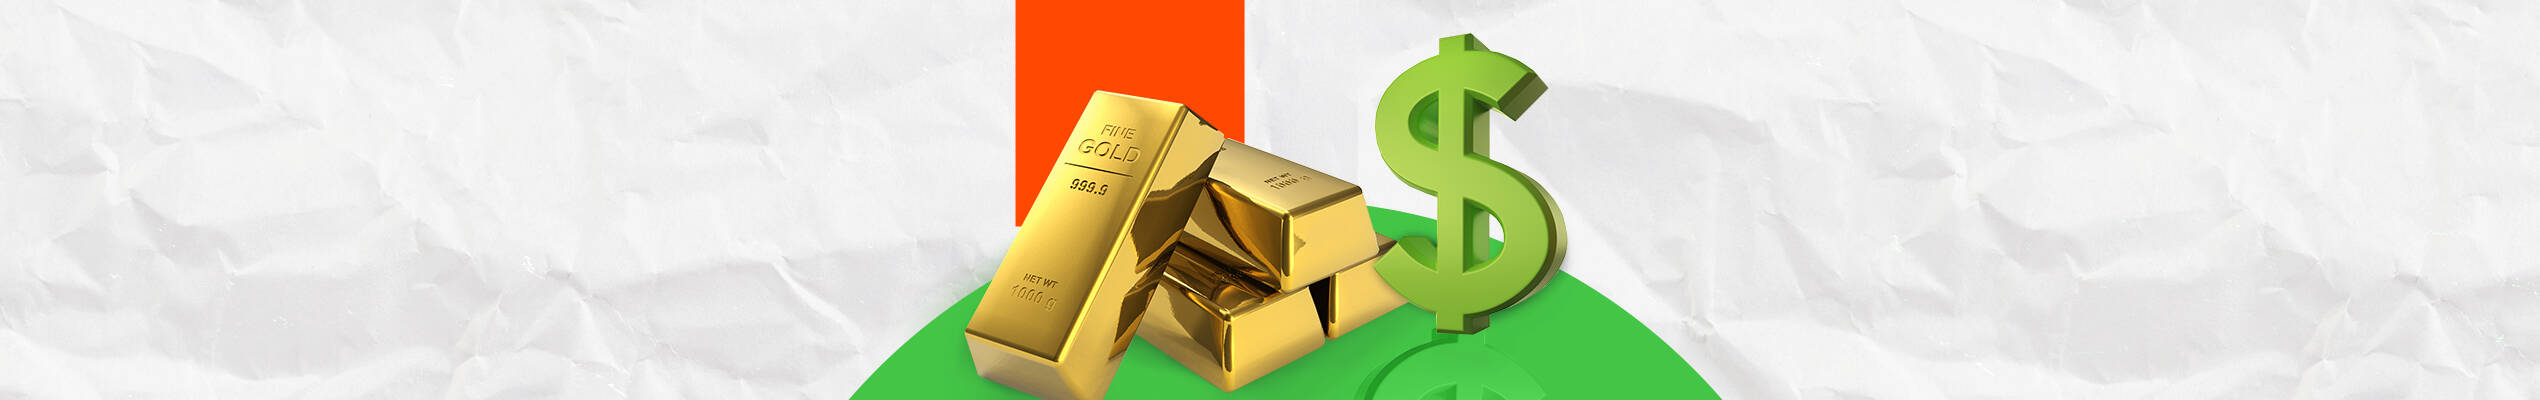 Gold Trade Update